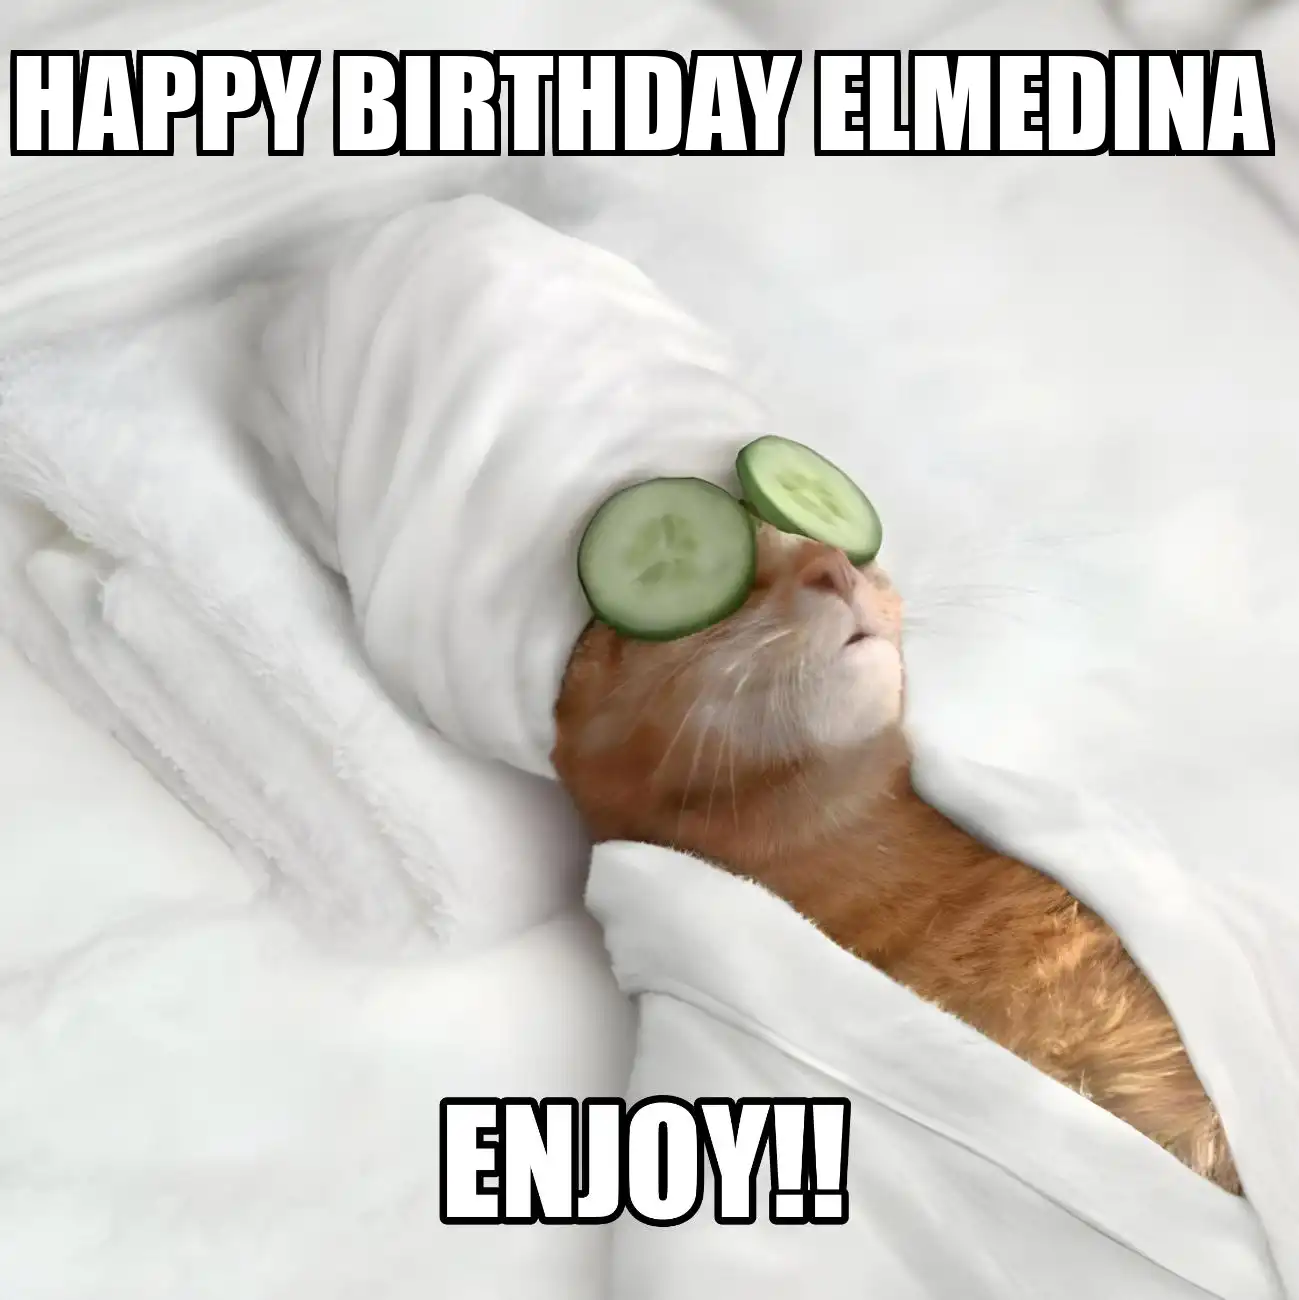 Happy Birthday Elmedina Enjoy Cat Meme